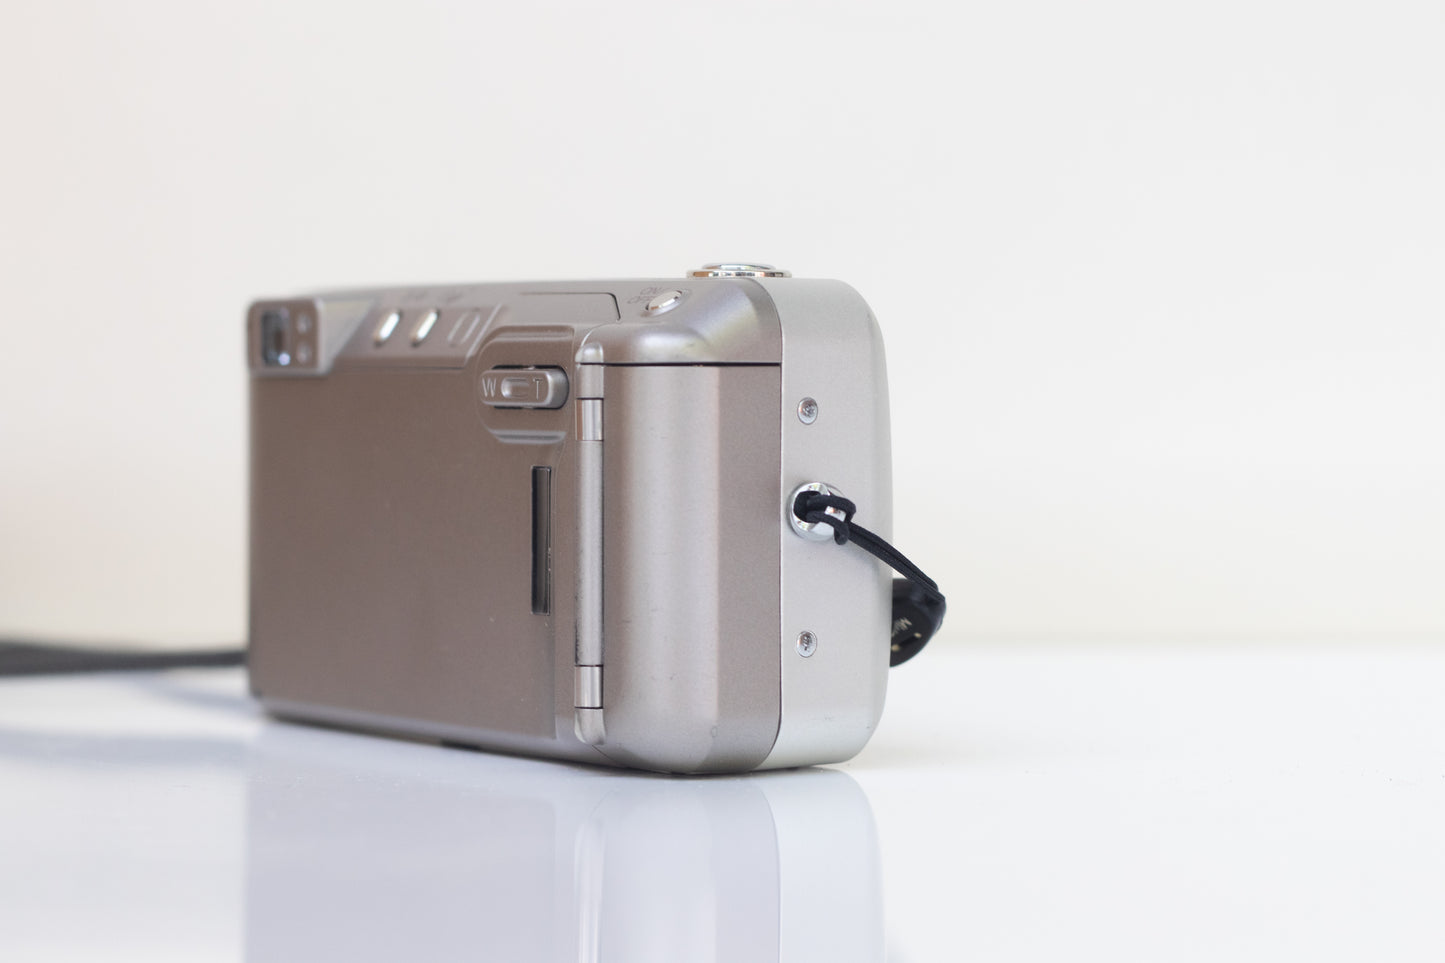 Minolta Freedom Zoom 125 | Classic 35mm Point & Shoot Film Camera | Beginner Friendly | Mint Condition